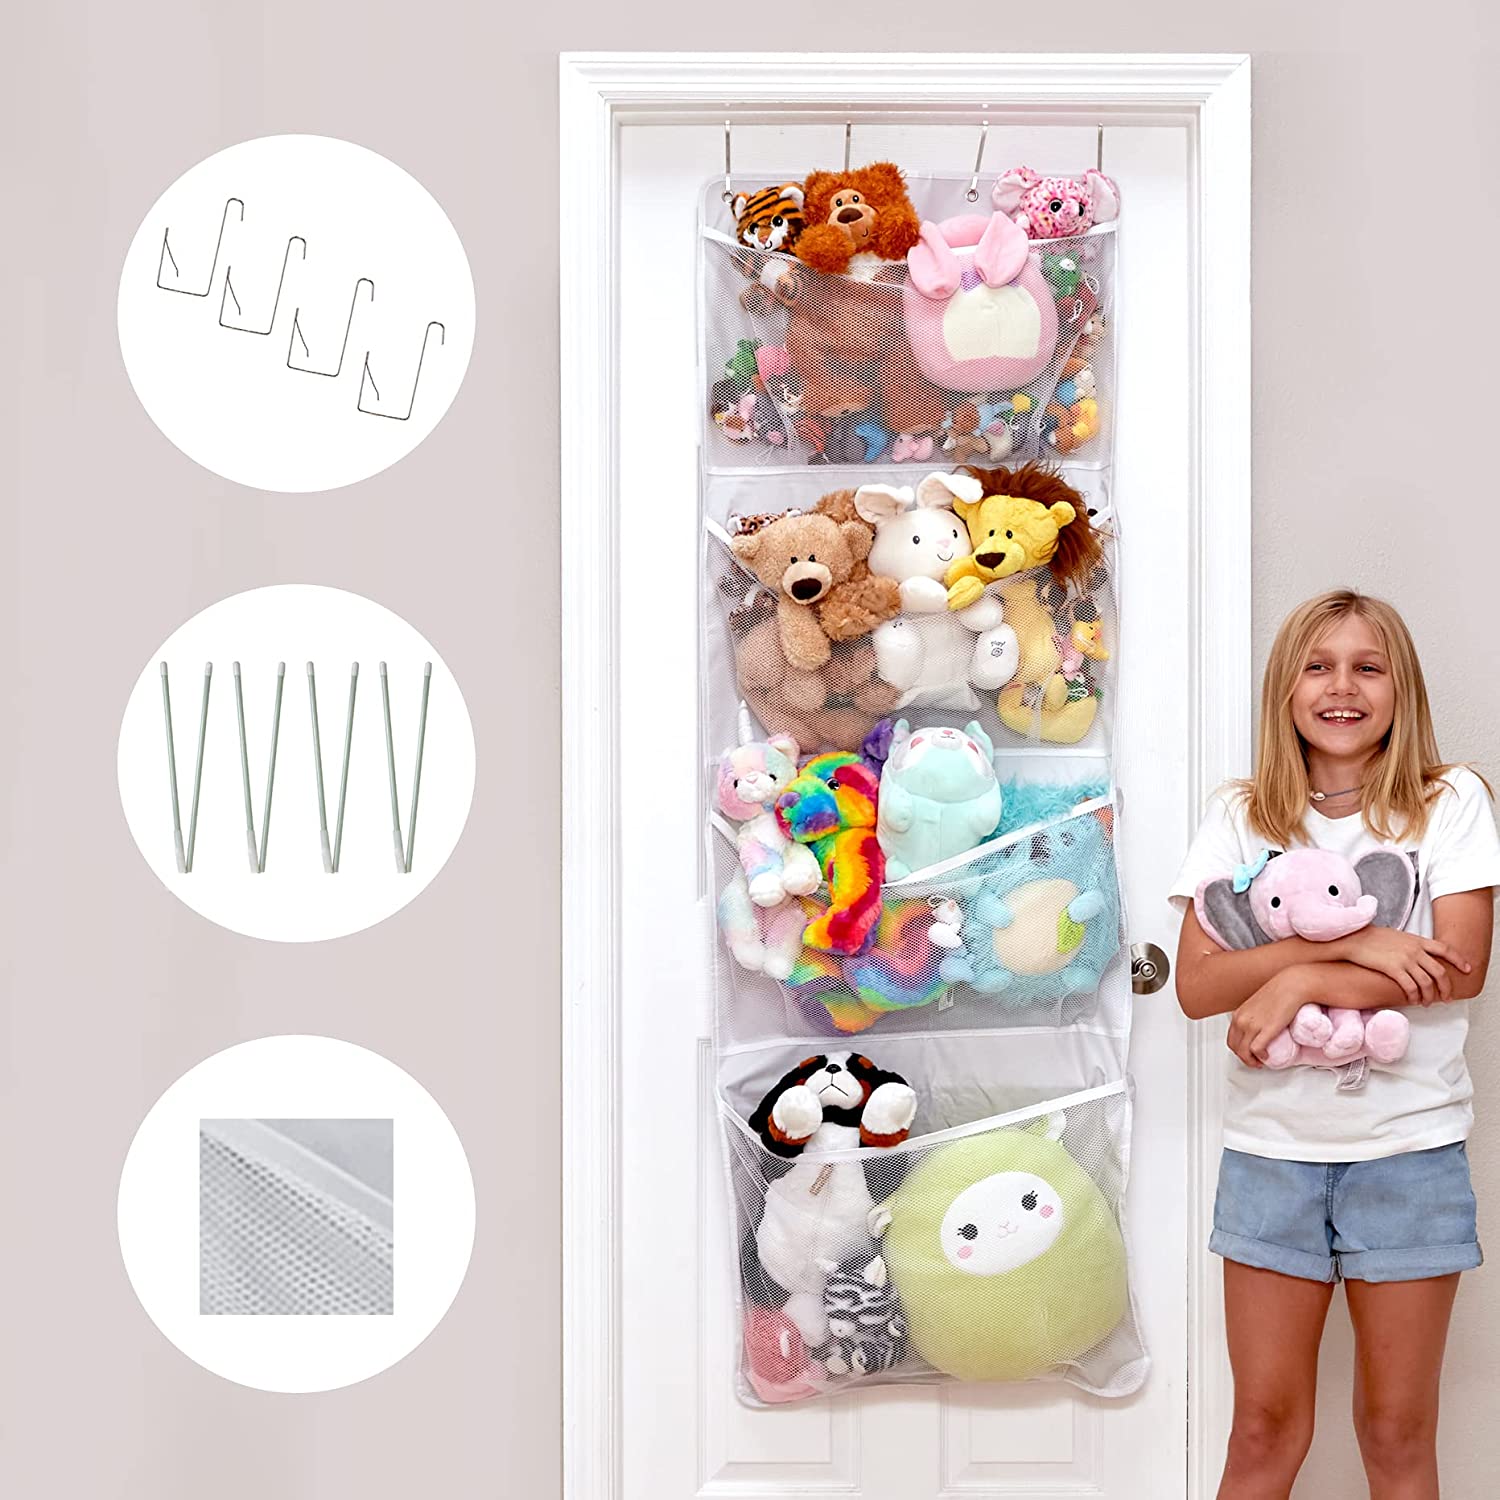 AXLOFO® LOL Toys Storage Organizer, Hanging Over The Door